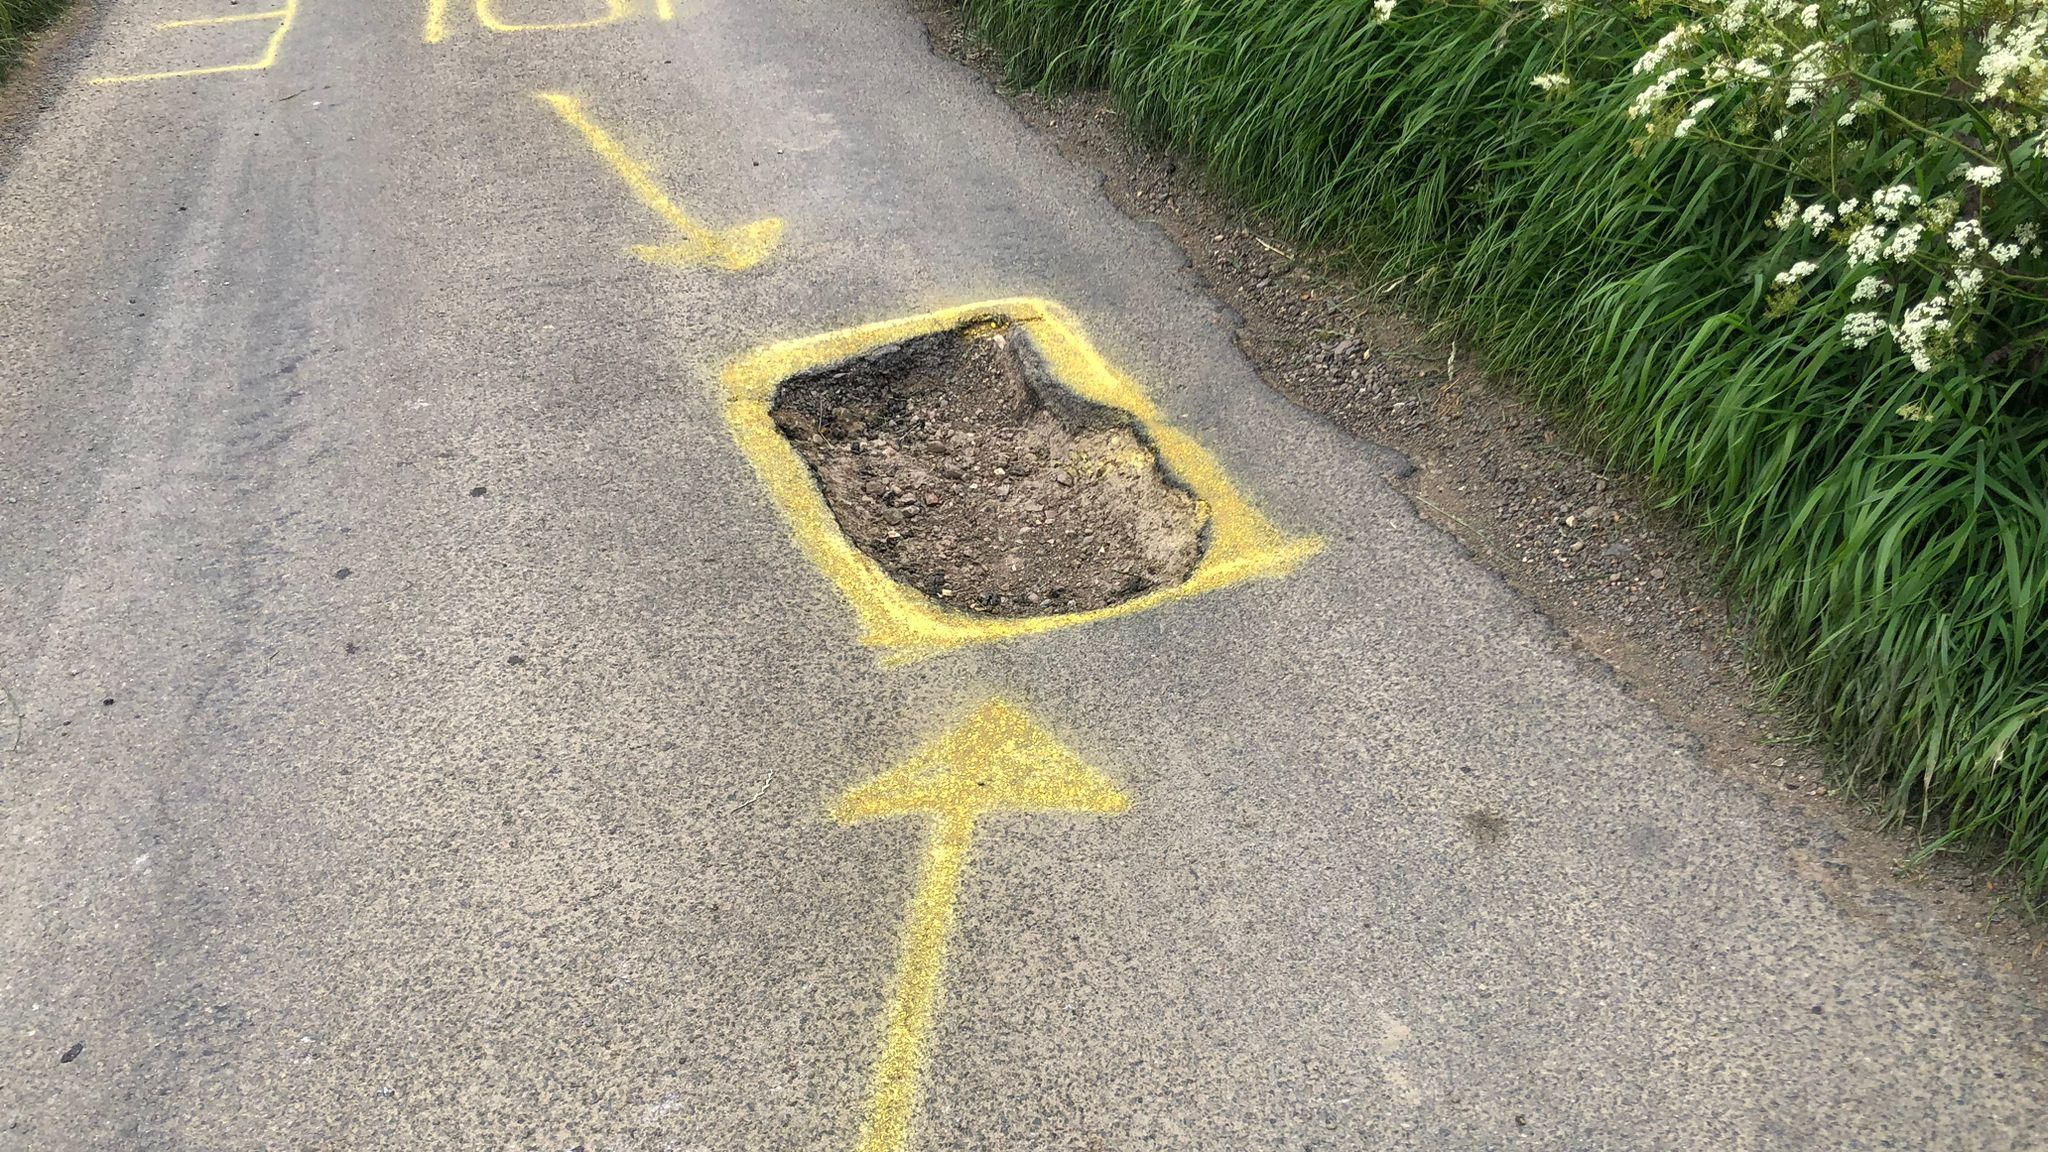 Pothole with yellow paint